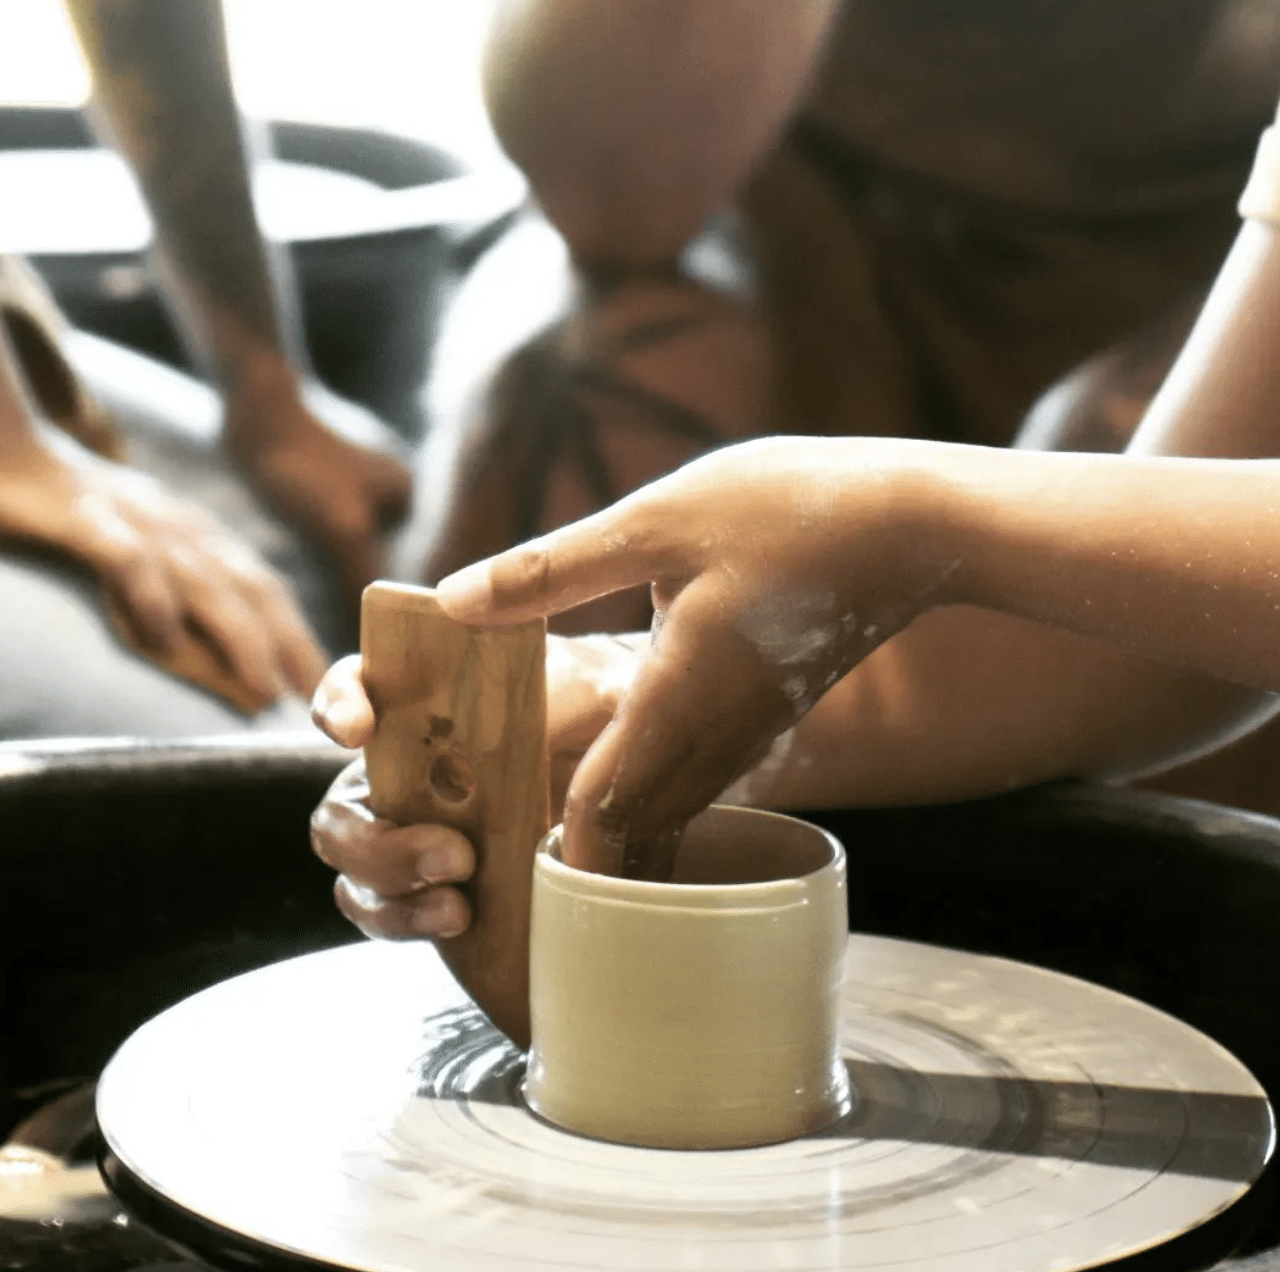 Fabrication de poterie au Nusa Clay Club